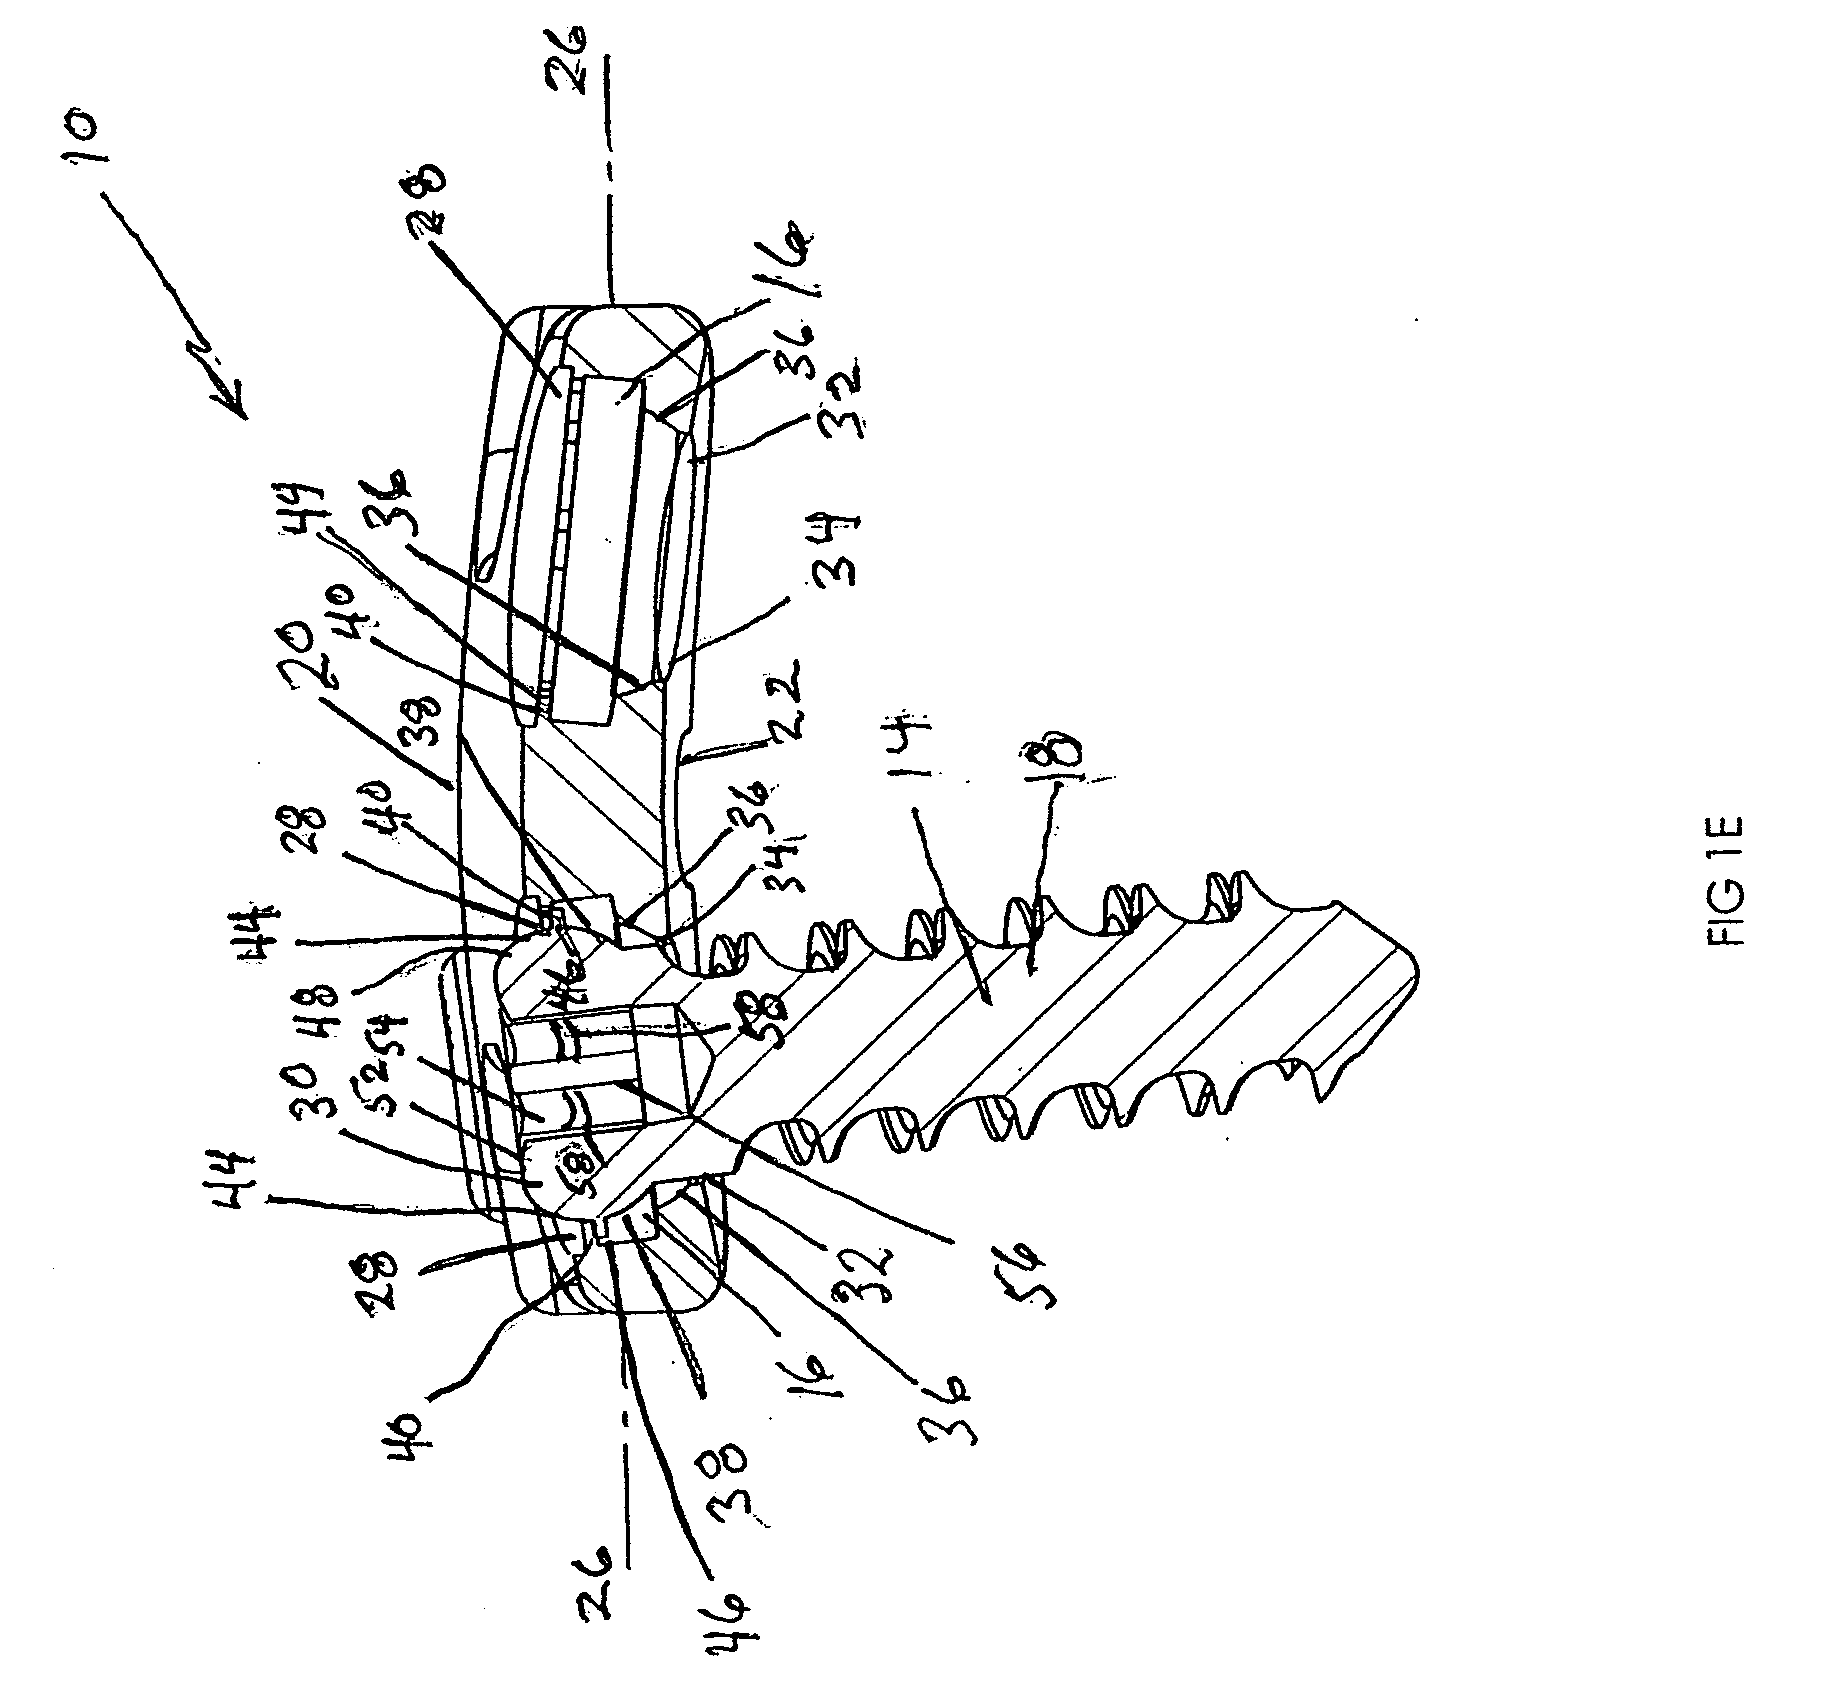 Anterior vertebral plate with quick lock screw